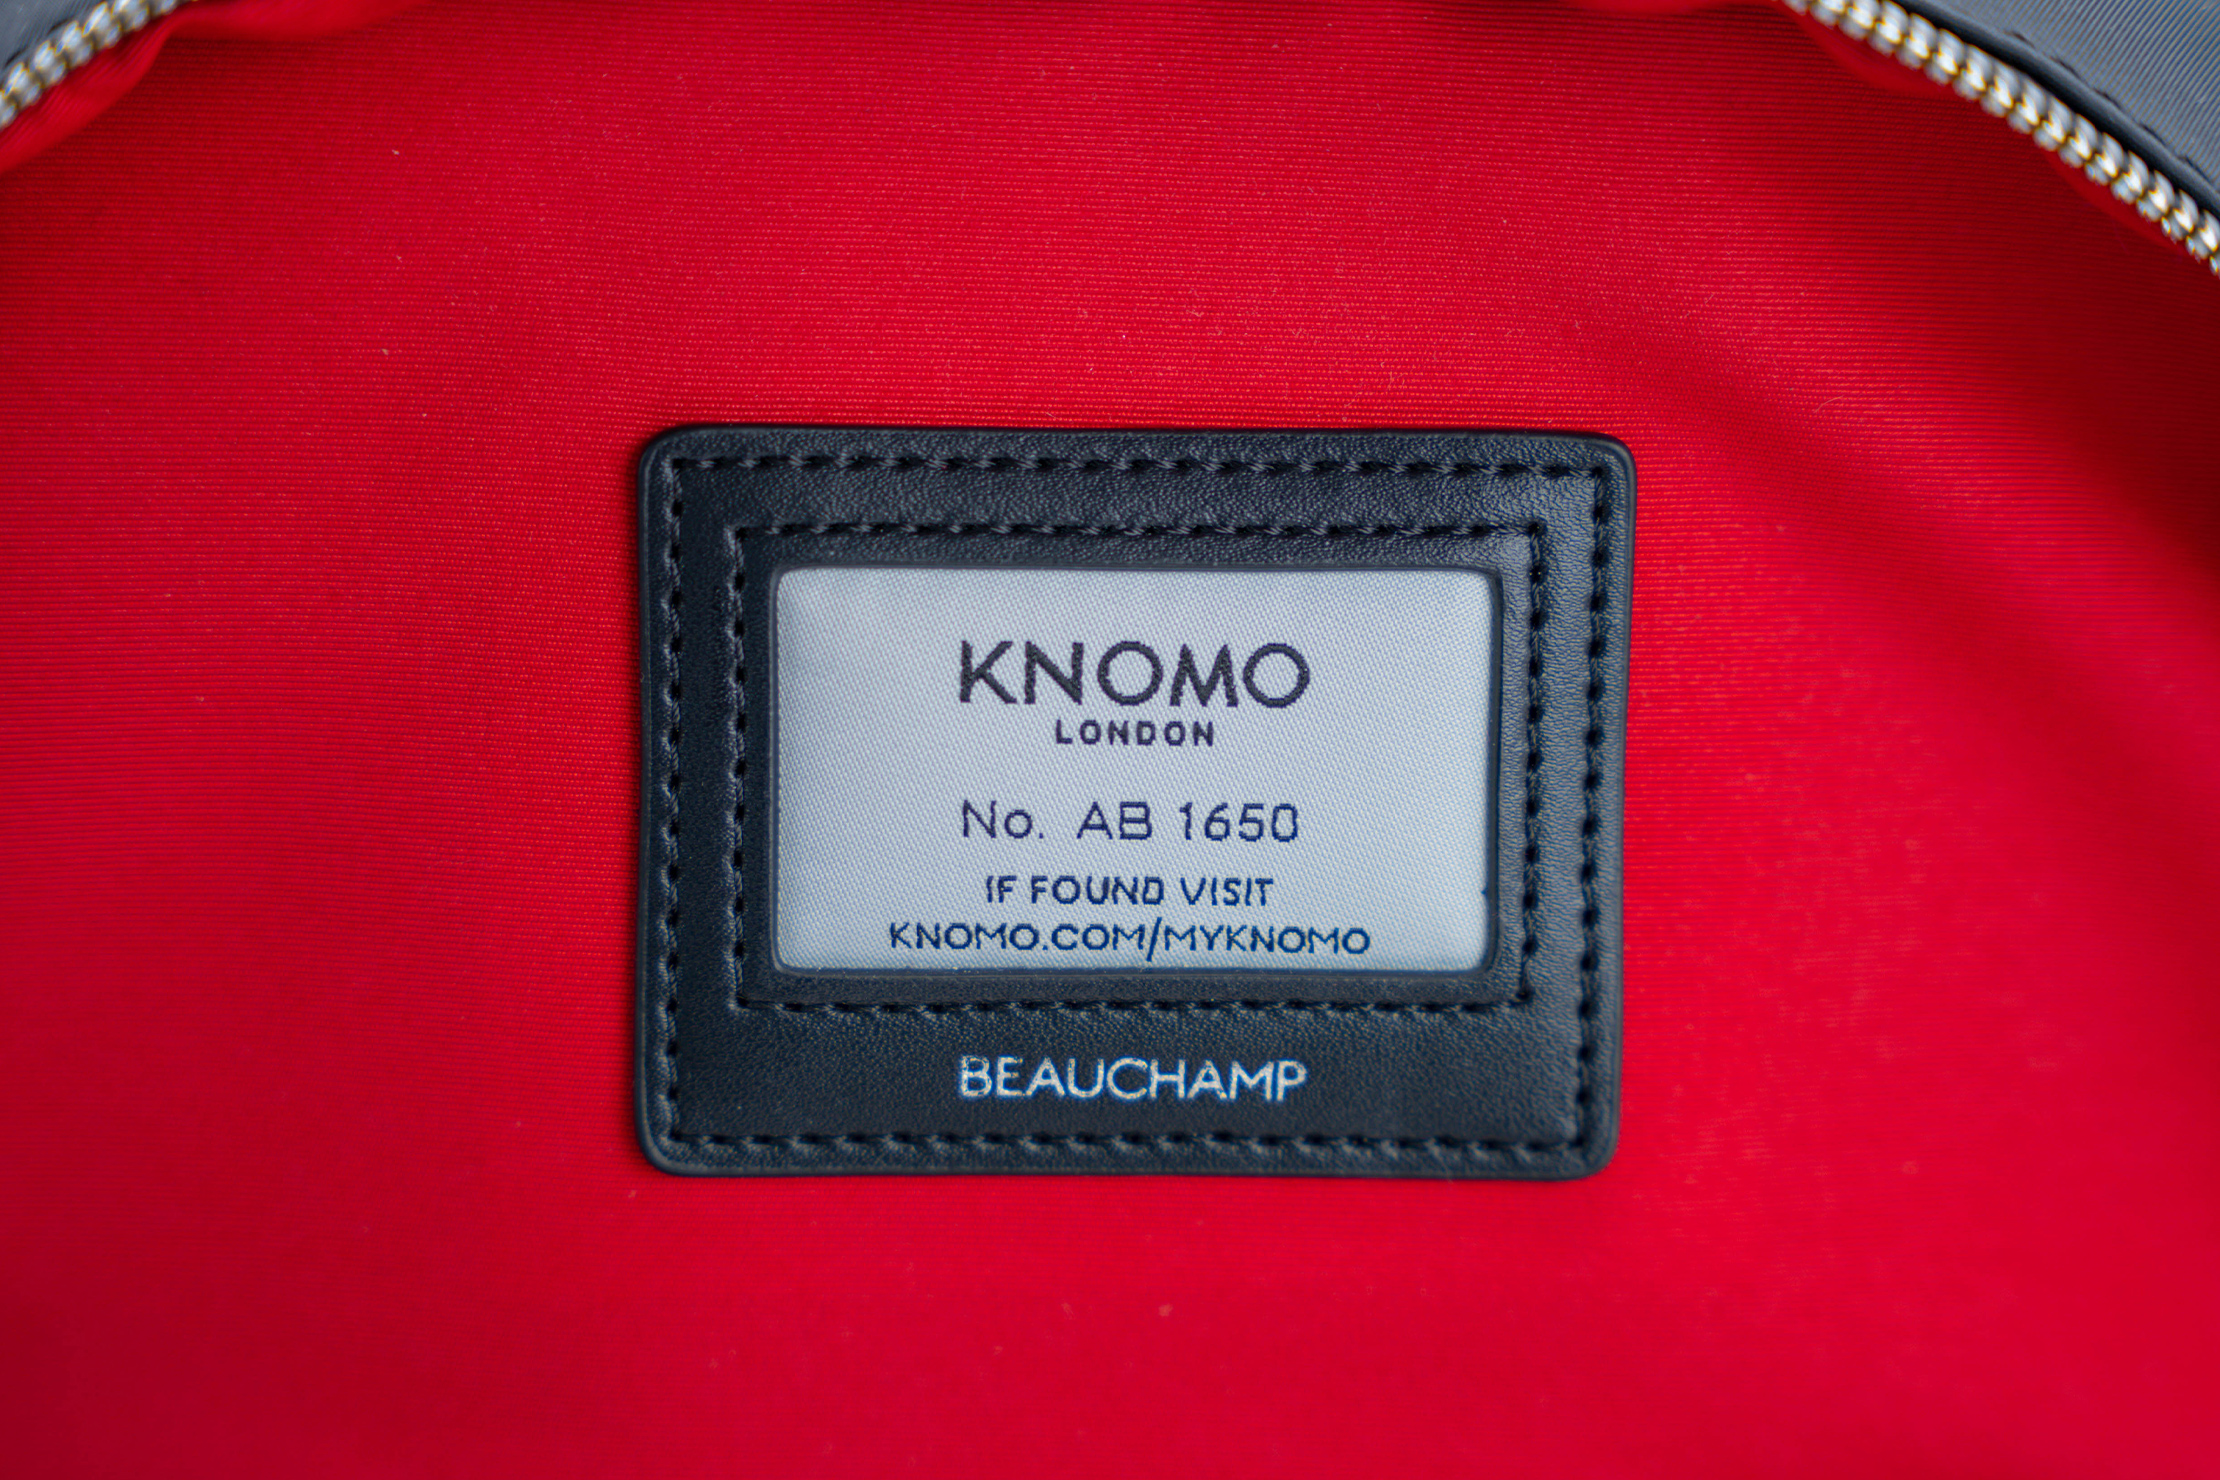 knomo-beauchamp-interior-tag